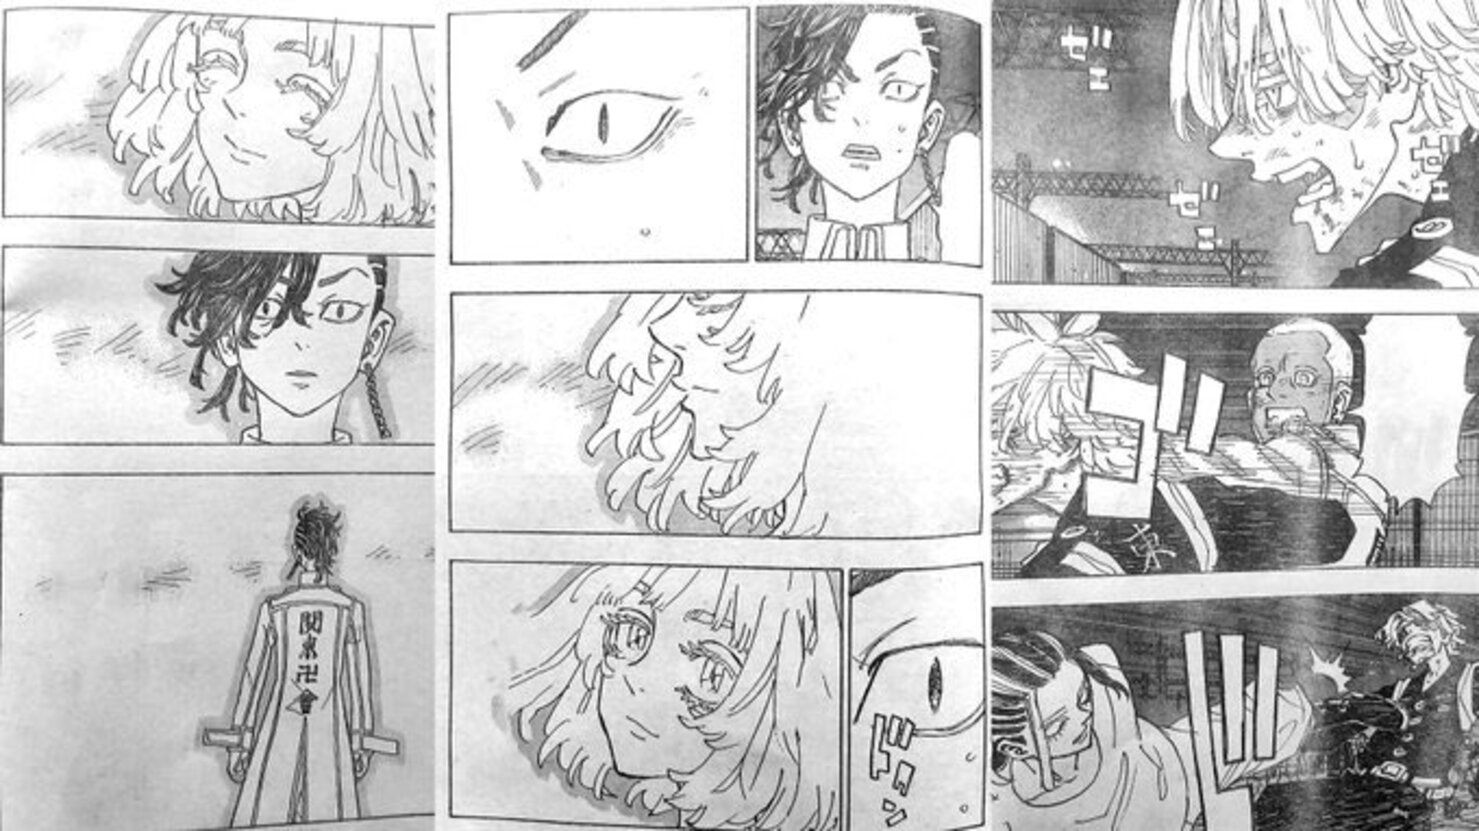 terlihat scene dimana Hajime Kokonoi mengingat senyum Senju, Inupi dan lainnya berusaha menyadarkan Koko kembali dibandingkan sebuah lamunan.